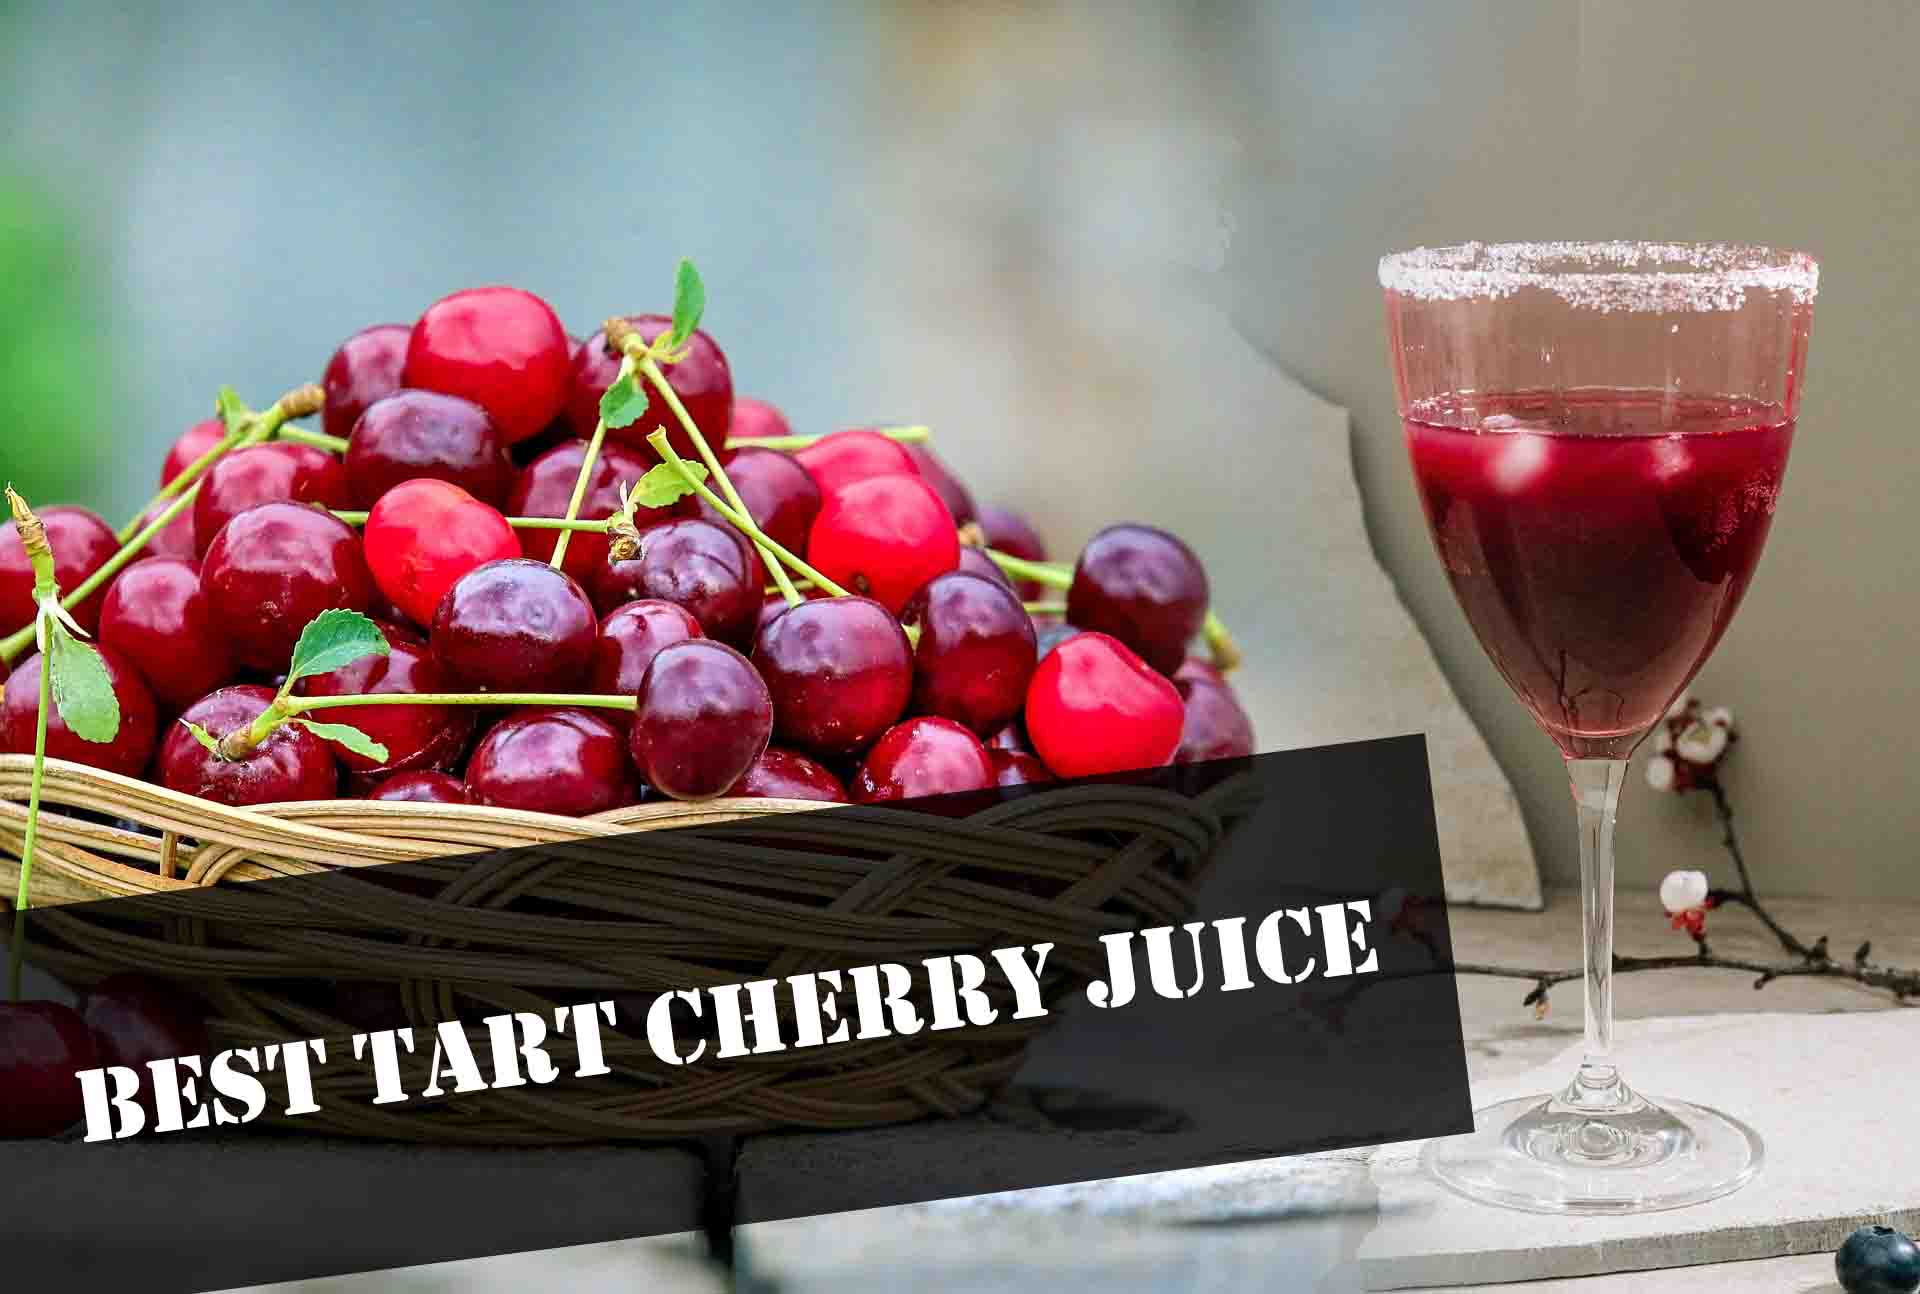 Best Tart Cherry Juice